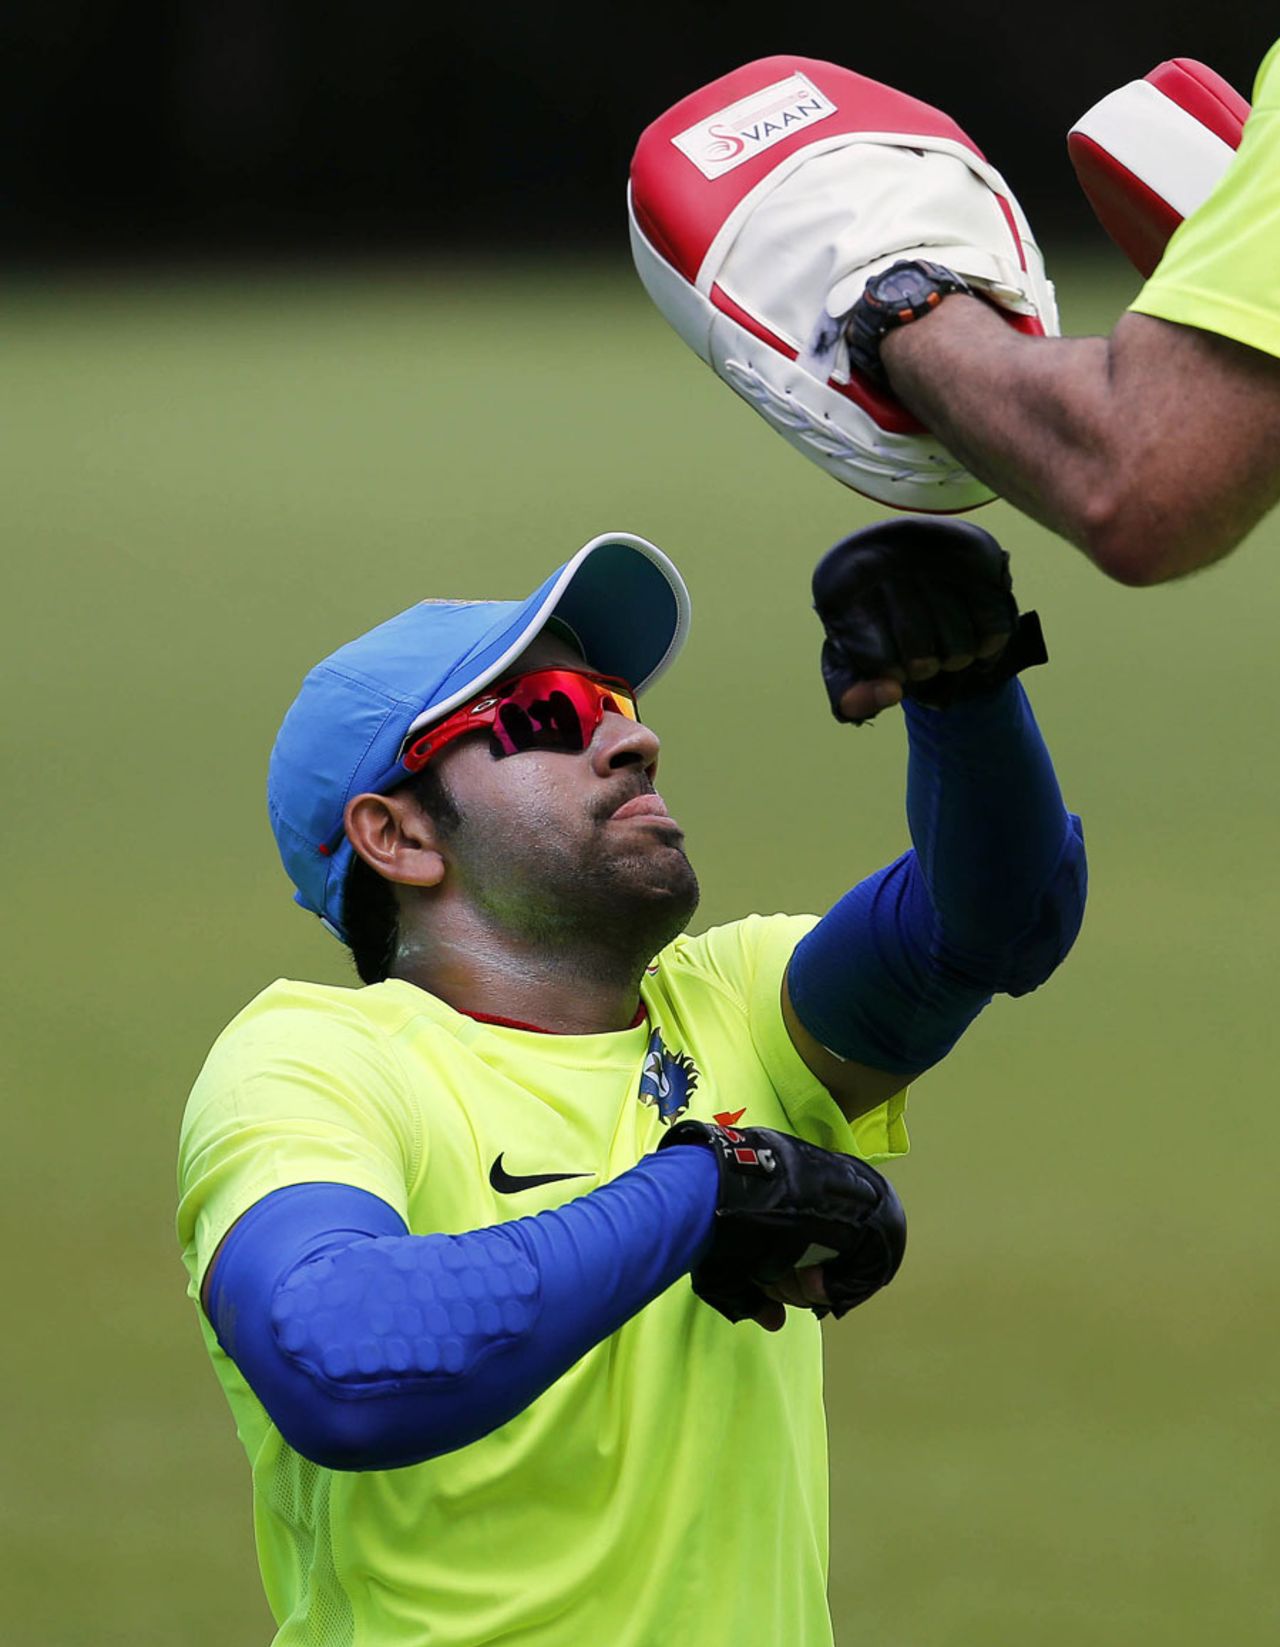 Rohit Sharma trains in Colombo, World Twenty20 2012, September 13, 2012